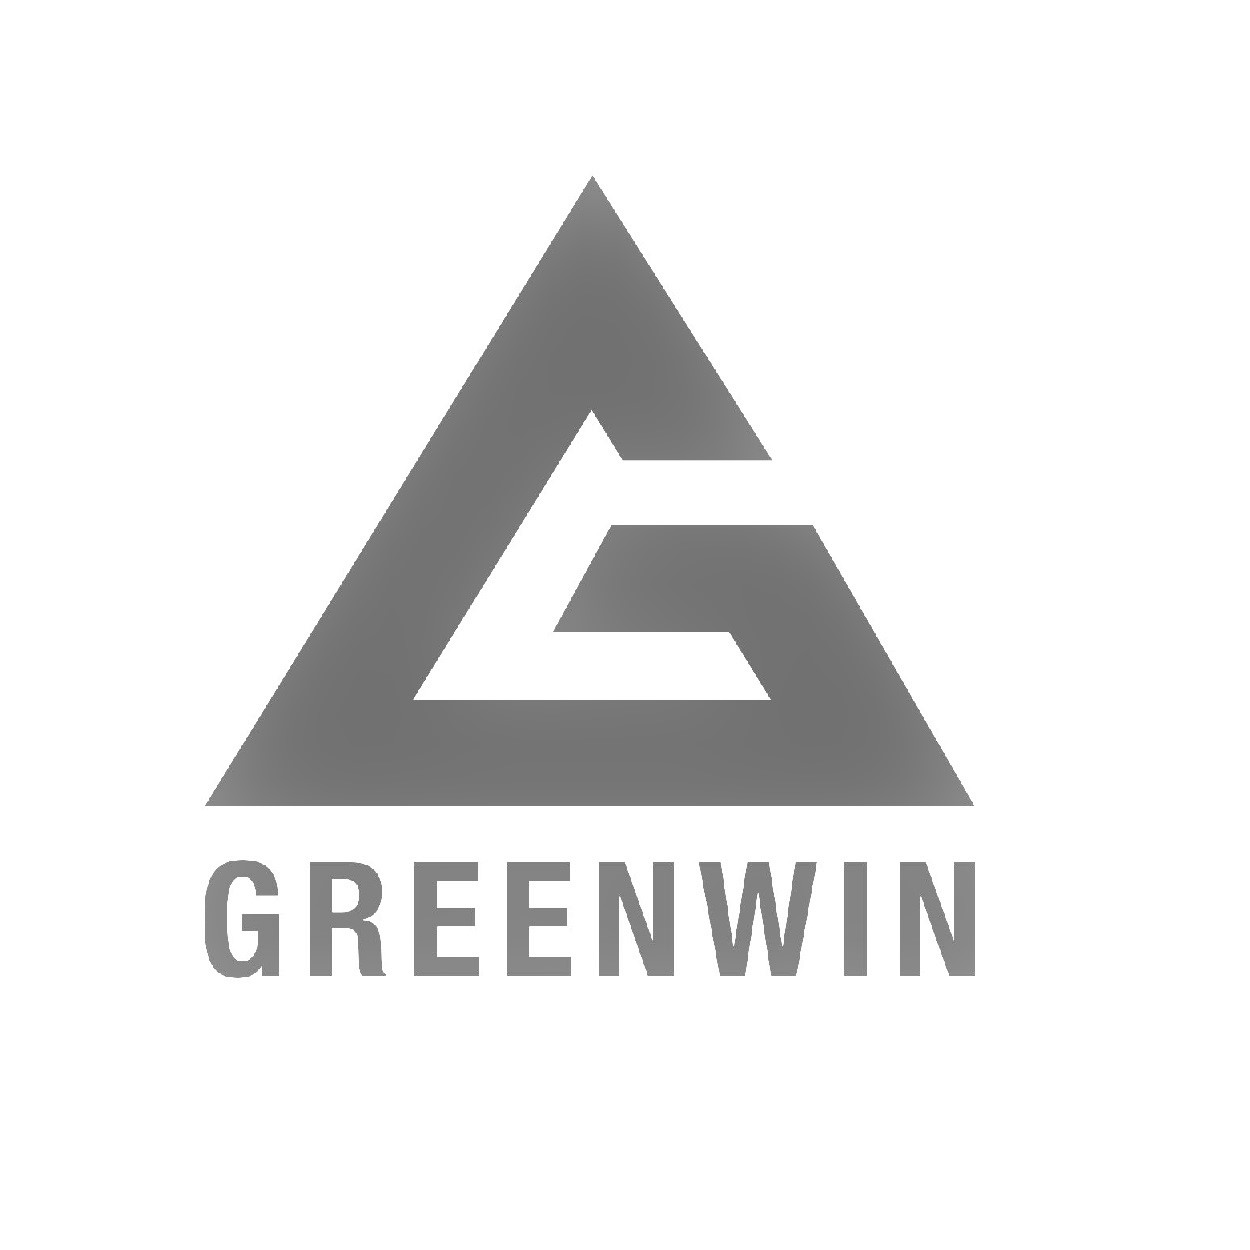 Greenwin logo